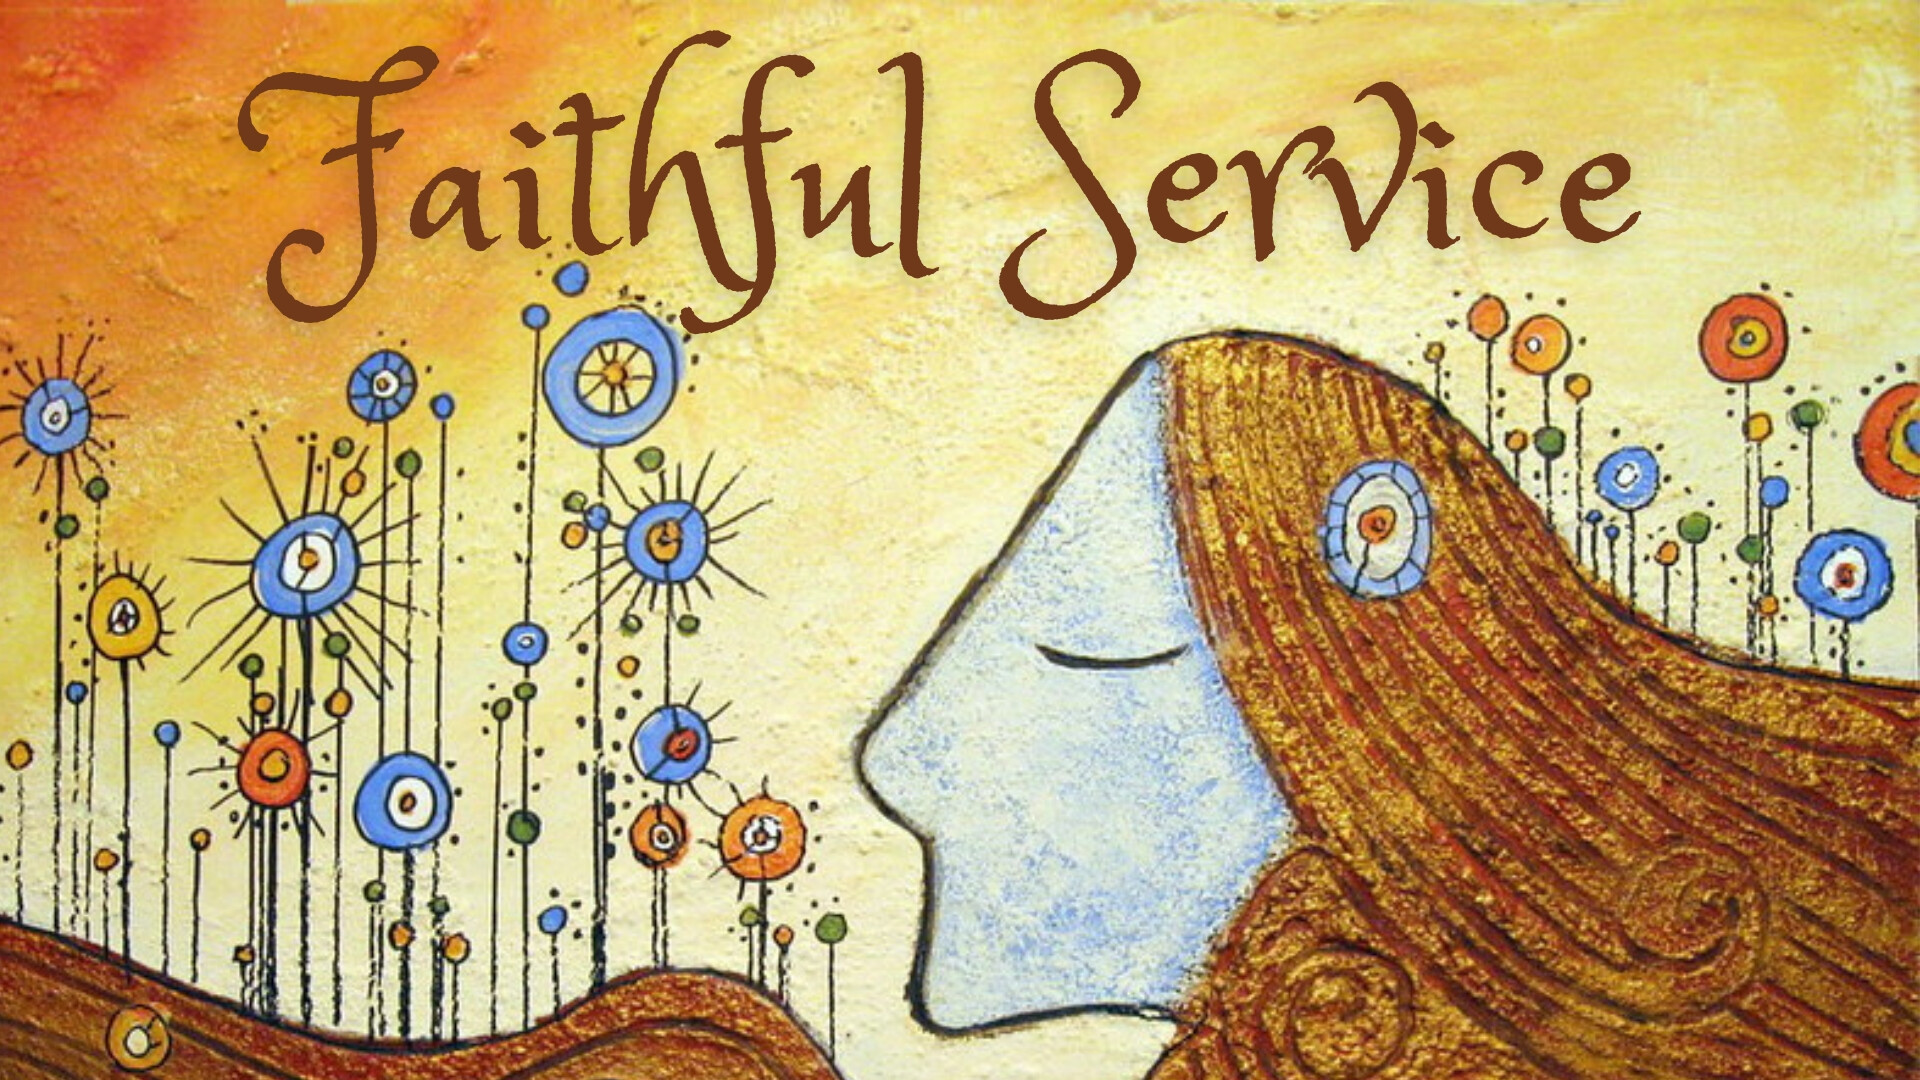 Faithful Service, Children's Message